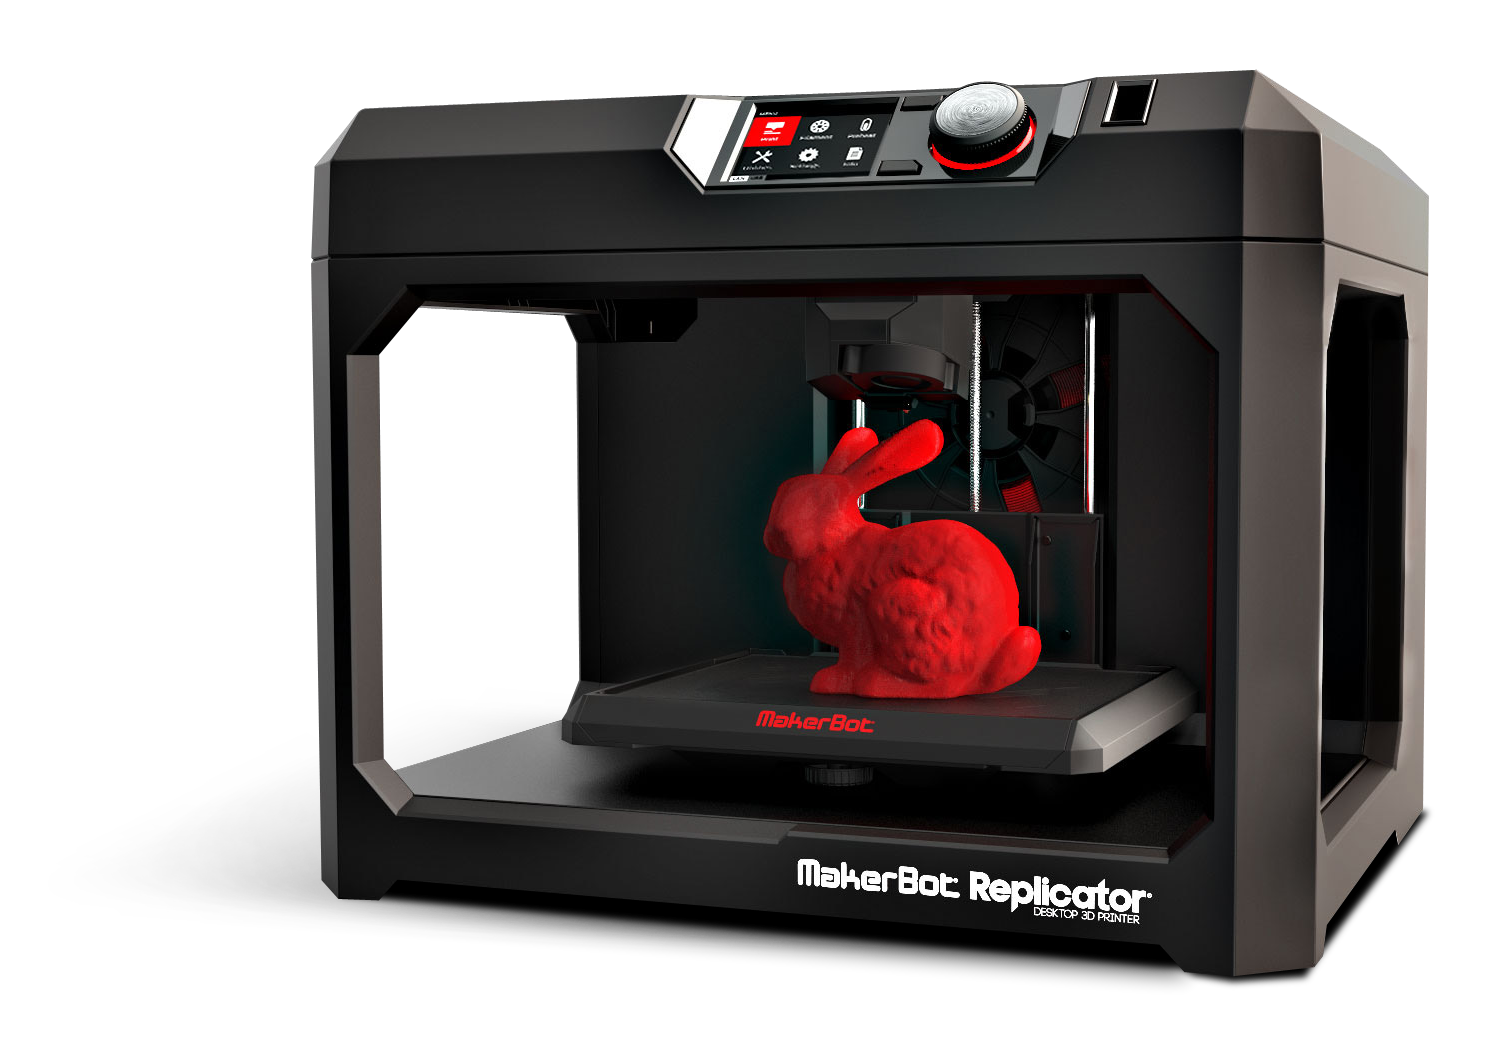 MakerBot Replicator 3D Printer Wins Red Dot Design Award - Makerbot Replicator